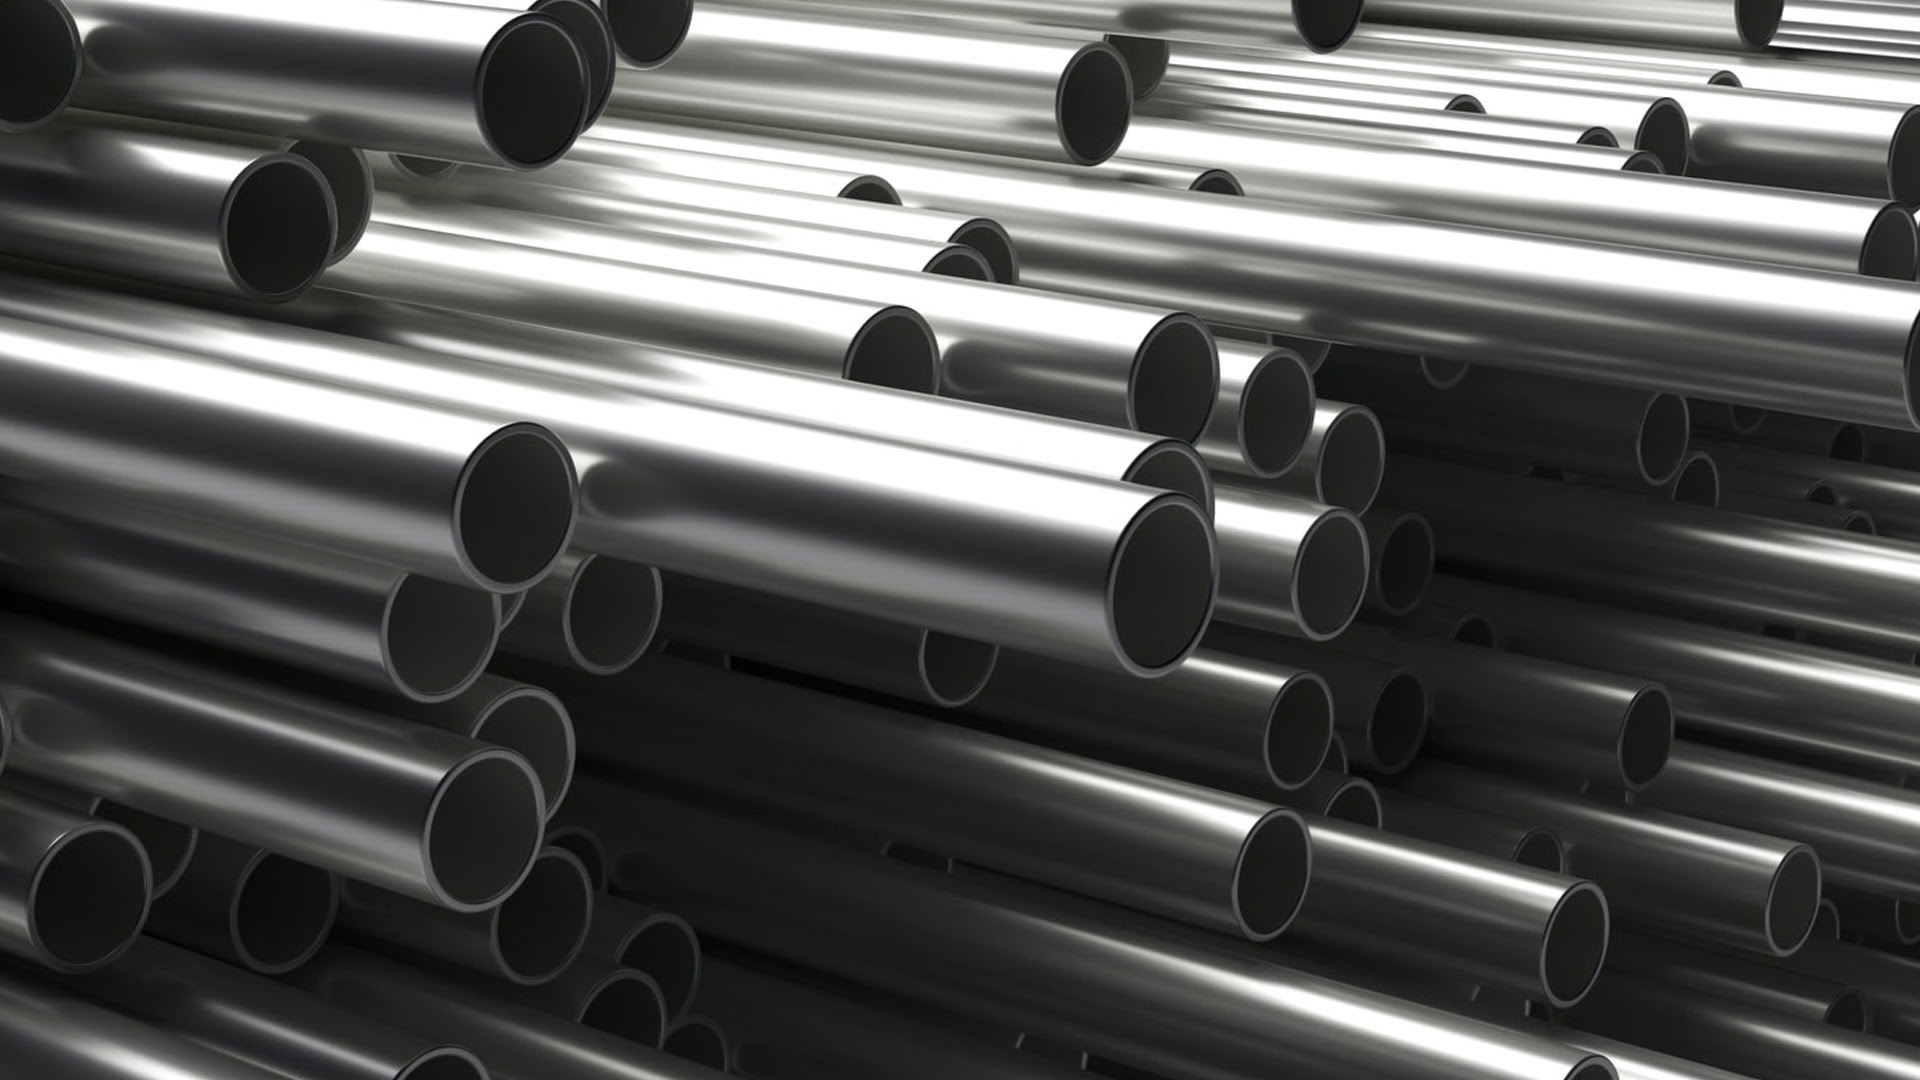 stainless-steel-316-welded-pipes-tubes.jpg